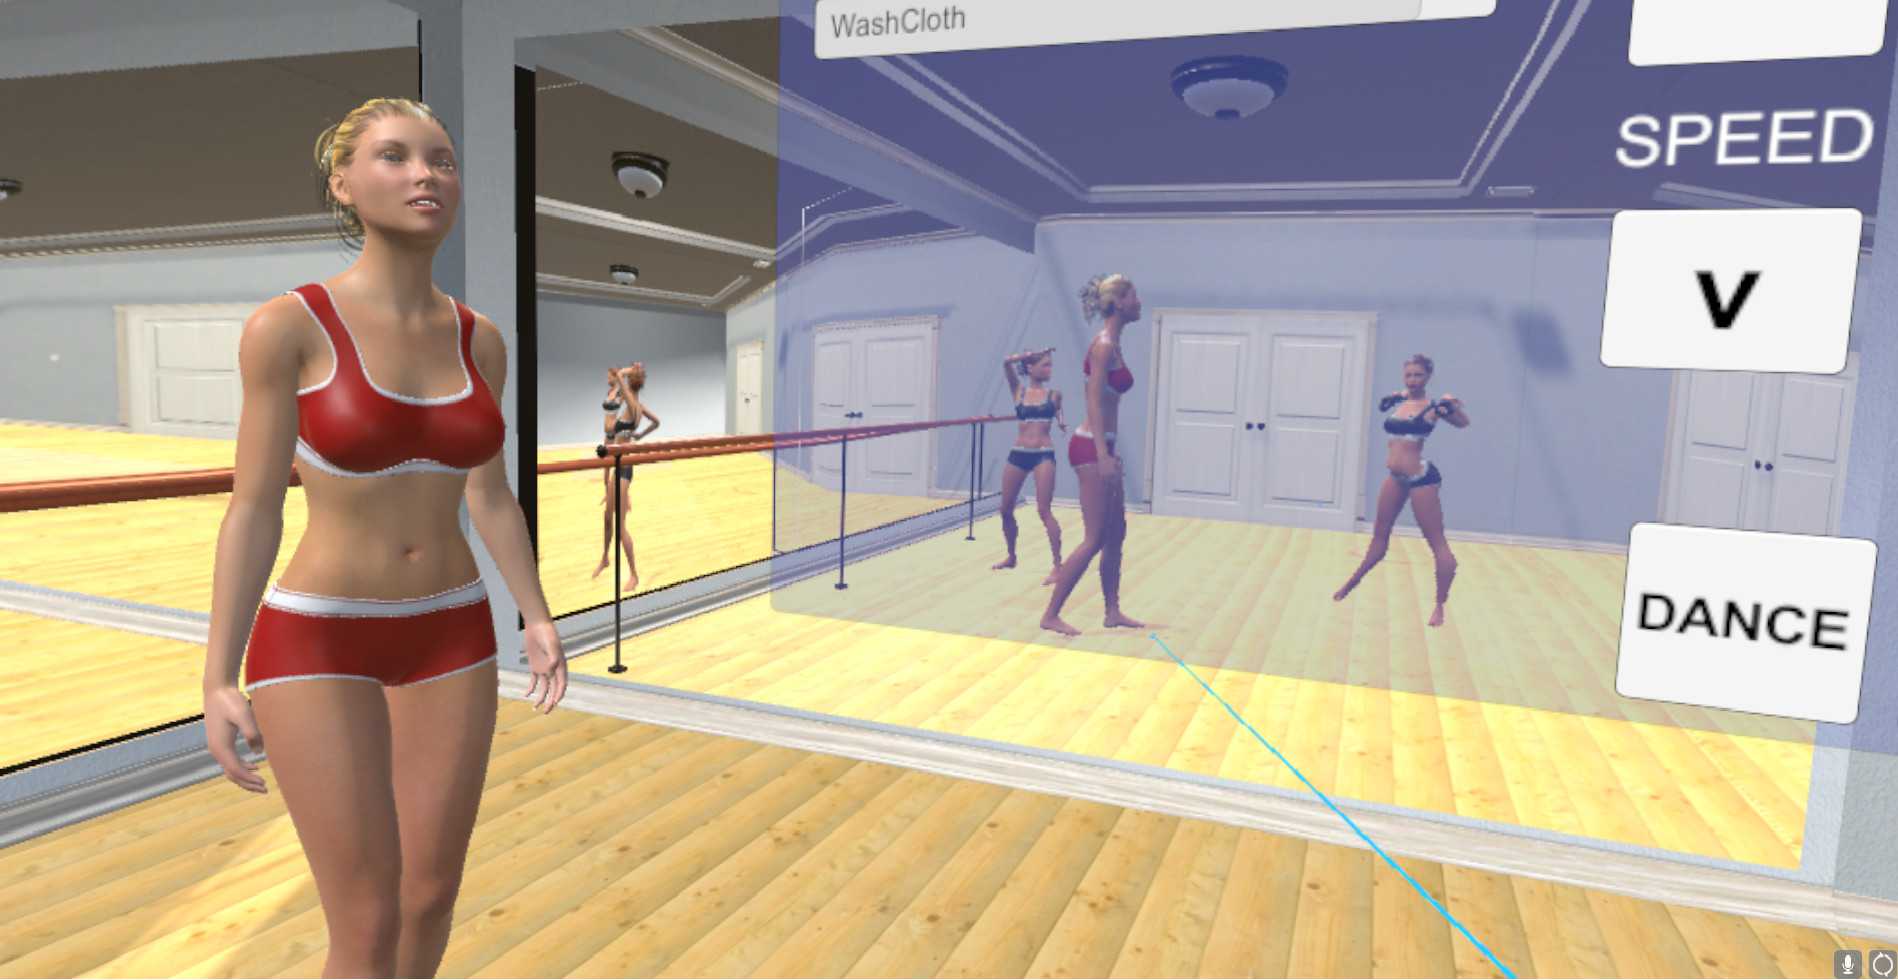 Dance Studio VR